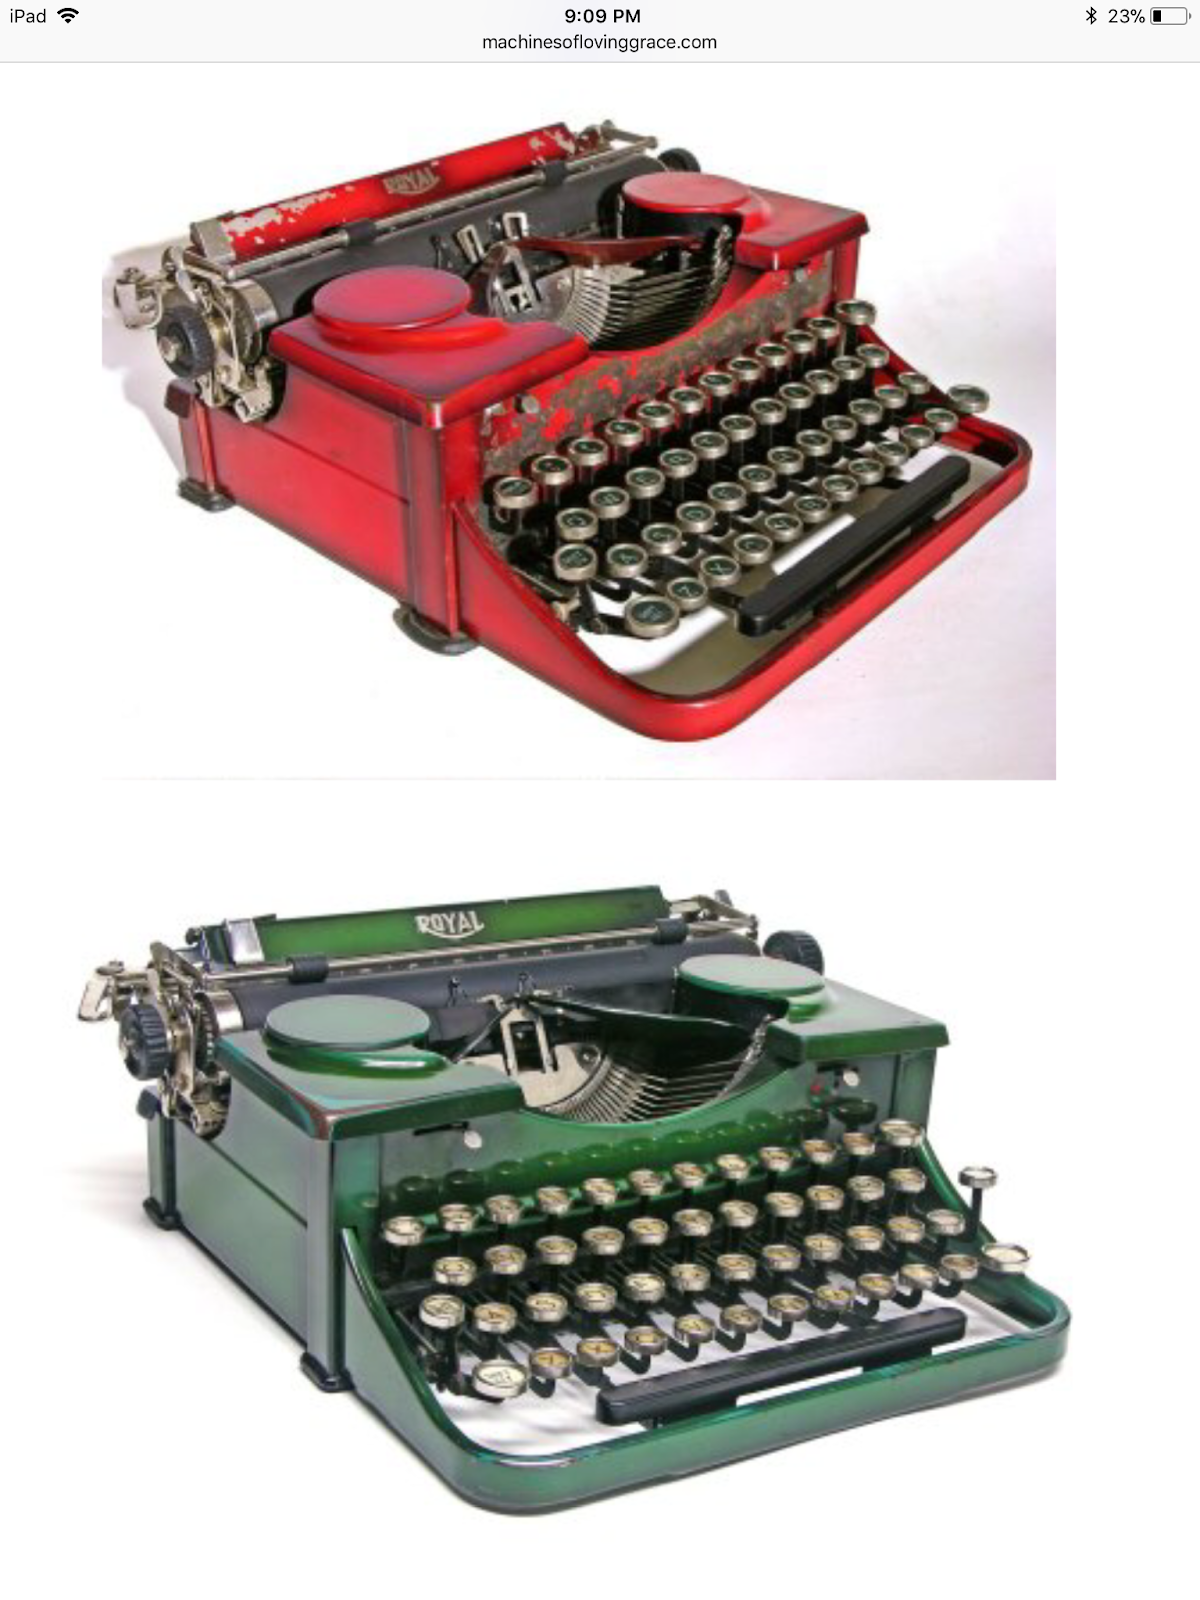 Antique Royal Standard Typewriter with Glass Panels c.1931